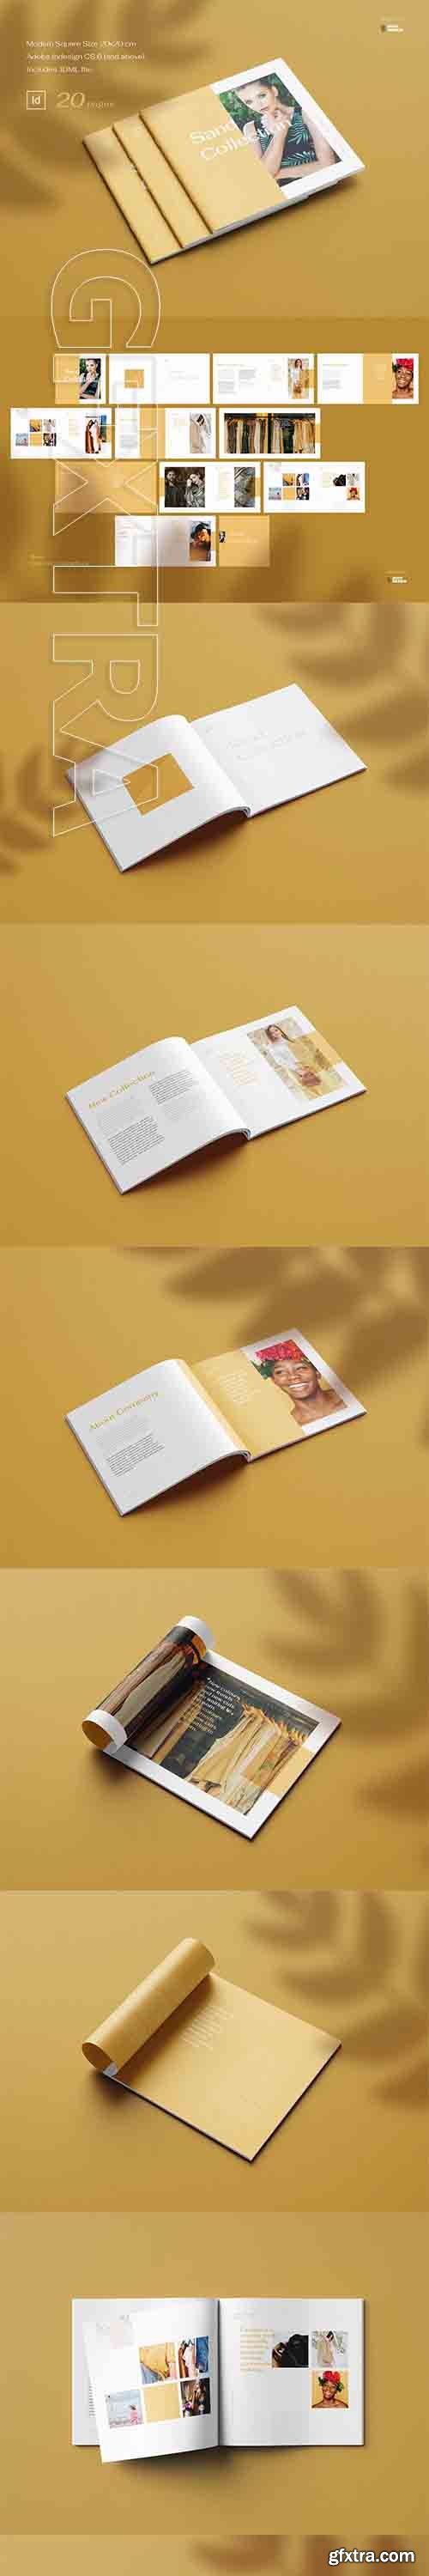 CreativeMarket - Sand Collection Brochure Template 3457702